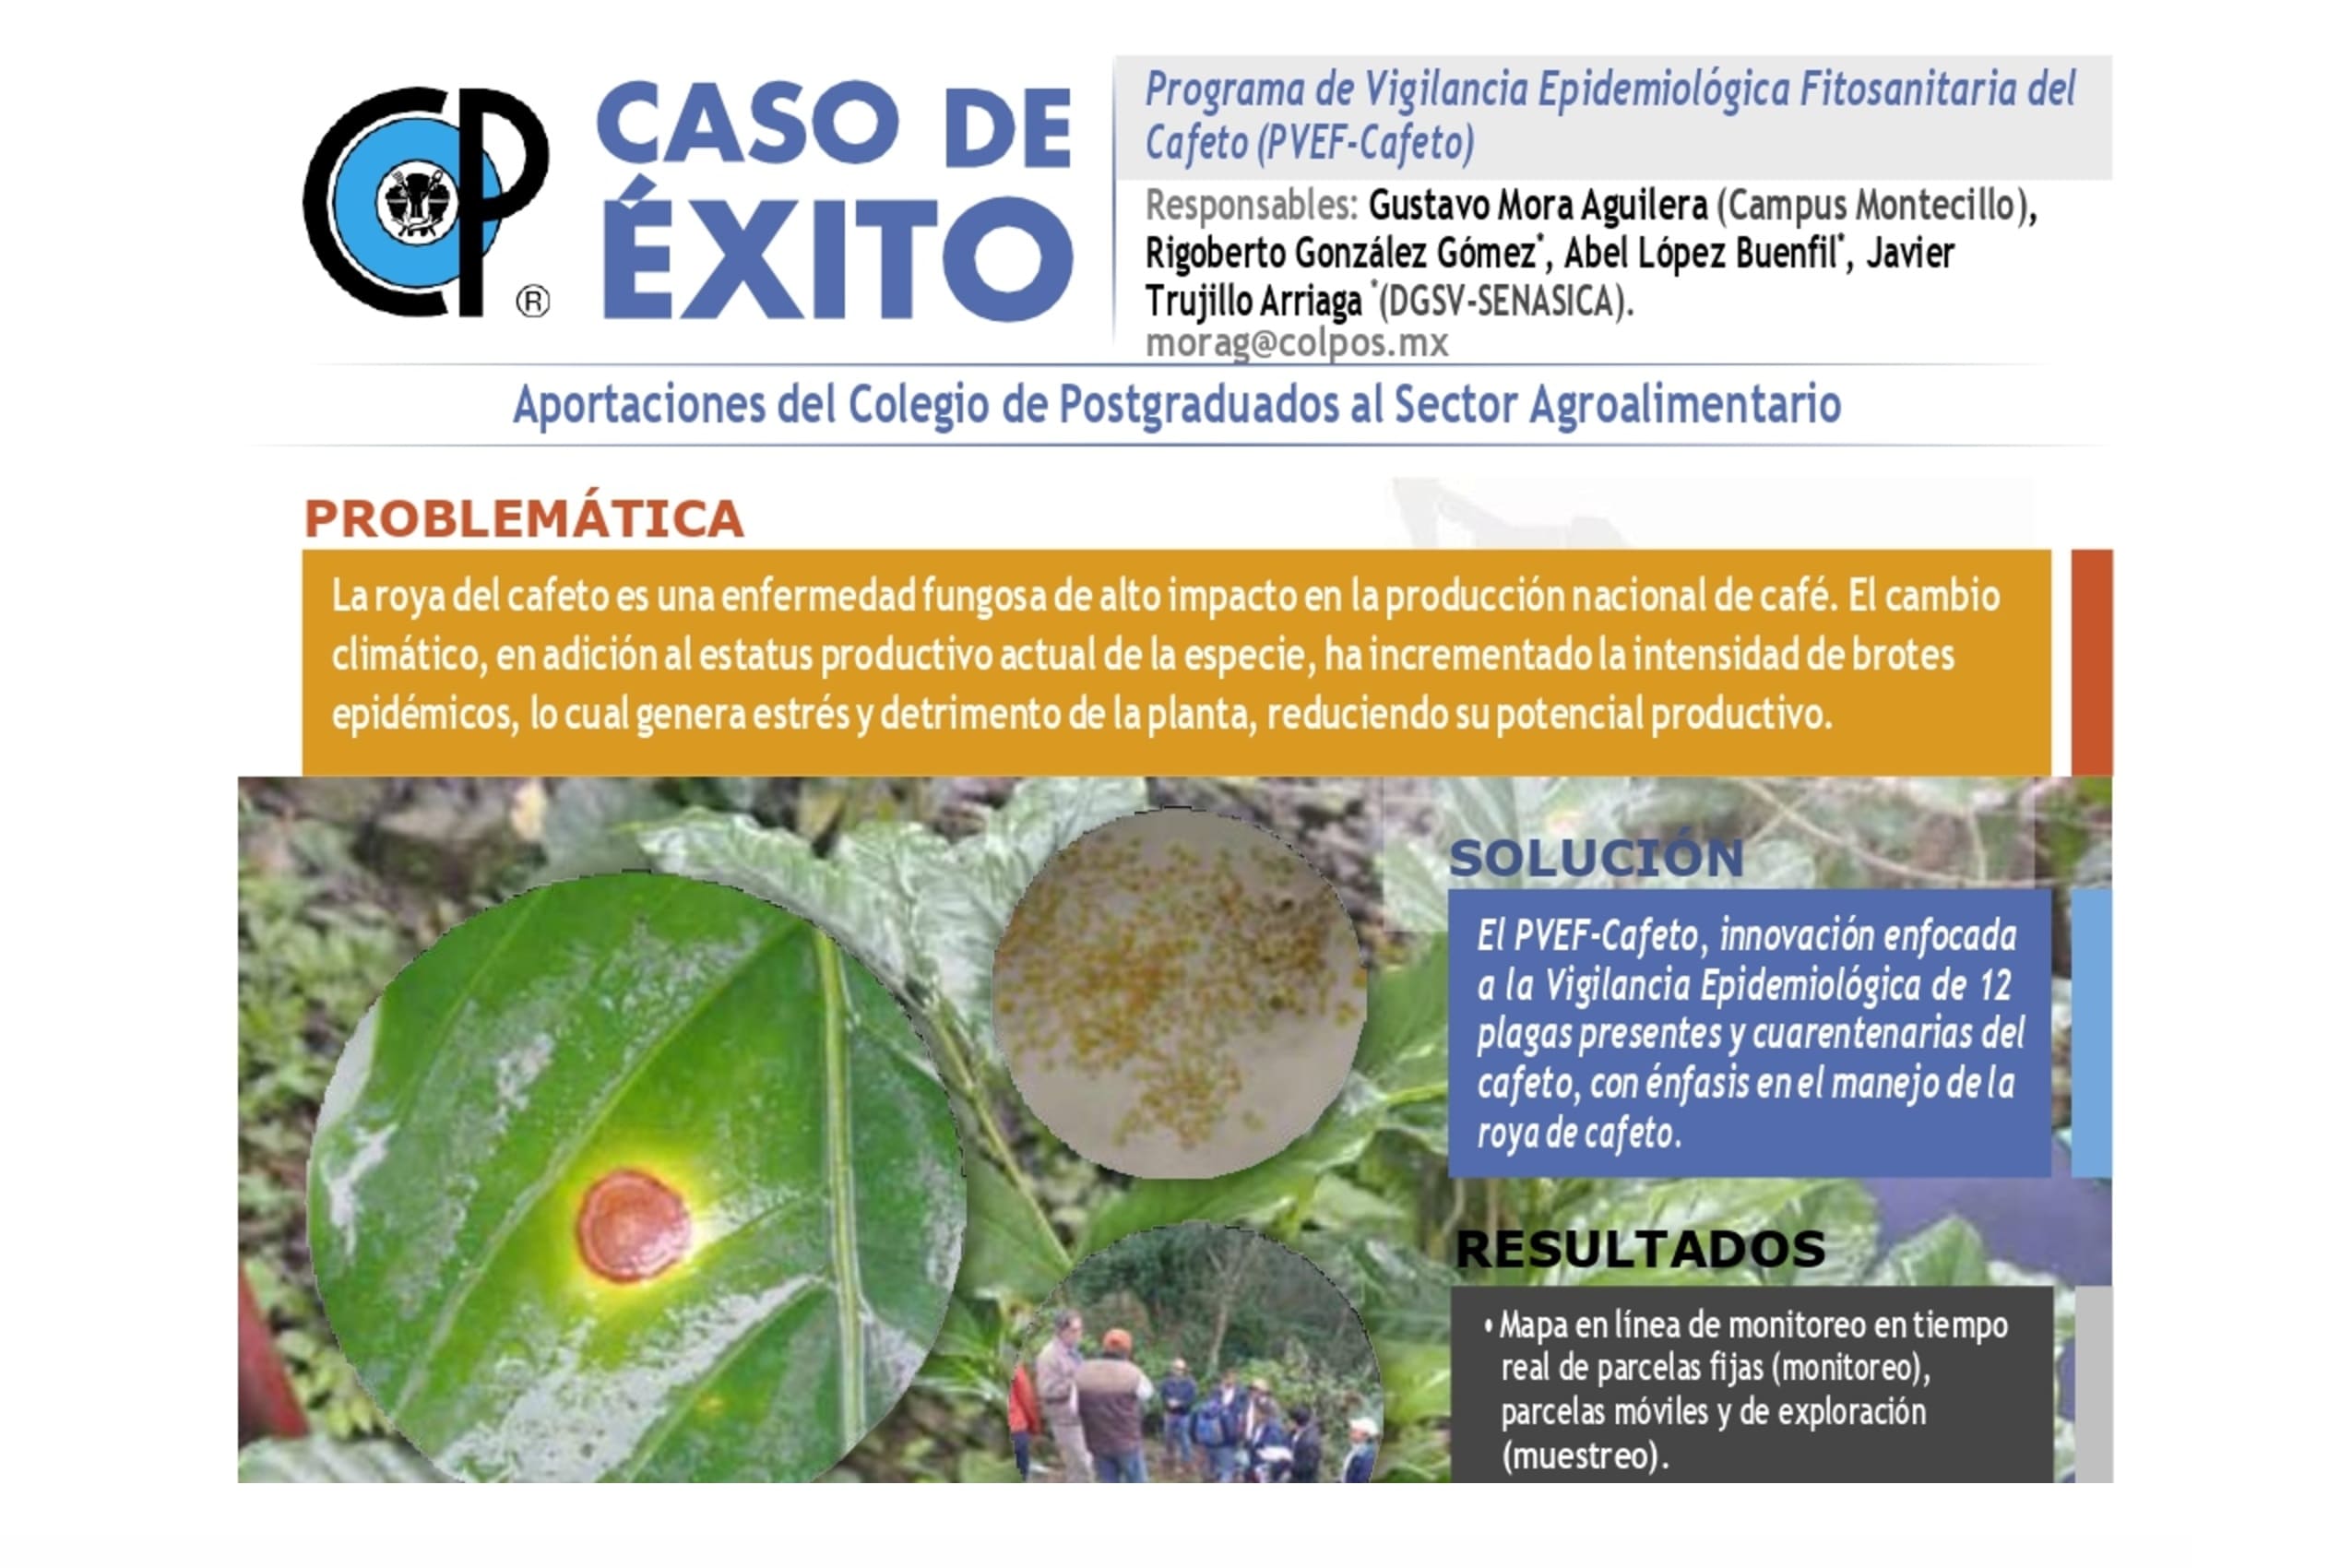 Programa de Vigilancia Epidemiológica Fitosanitaria del Cafeto (PVEF-Cafeto).